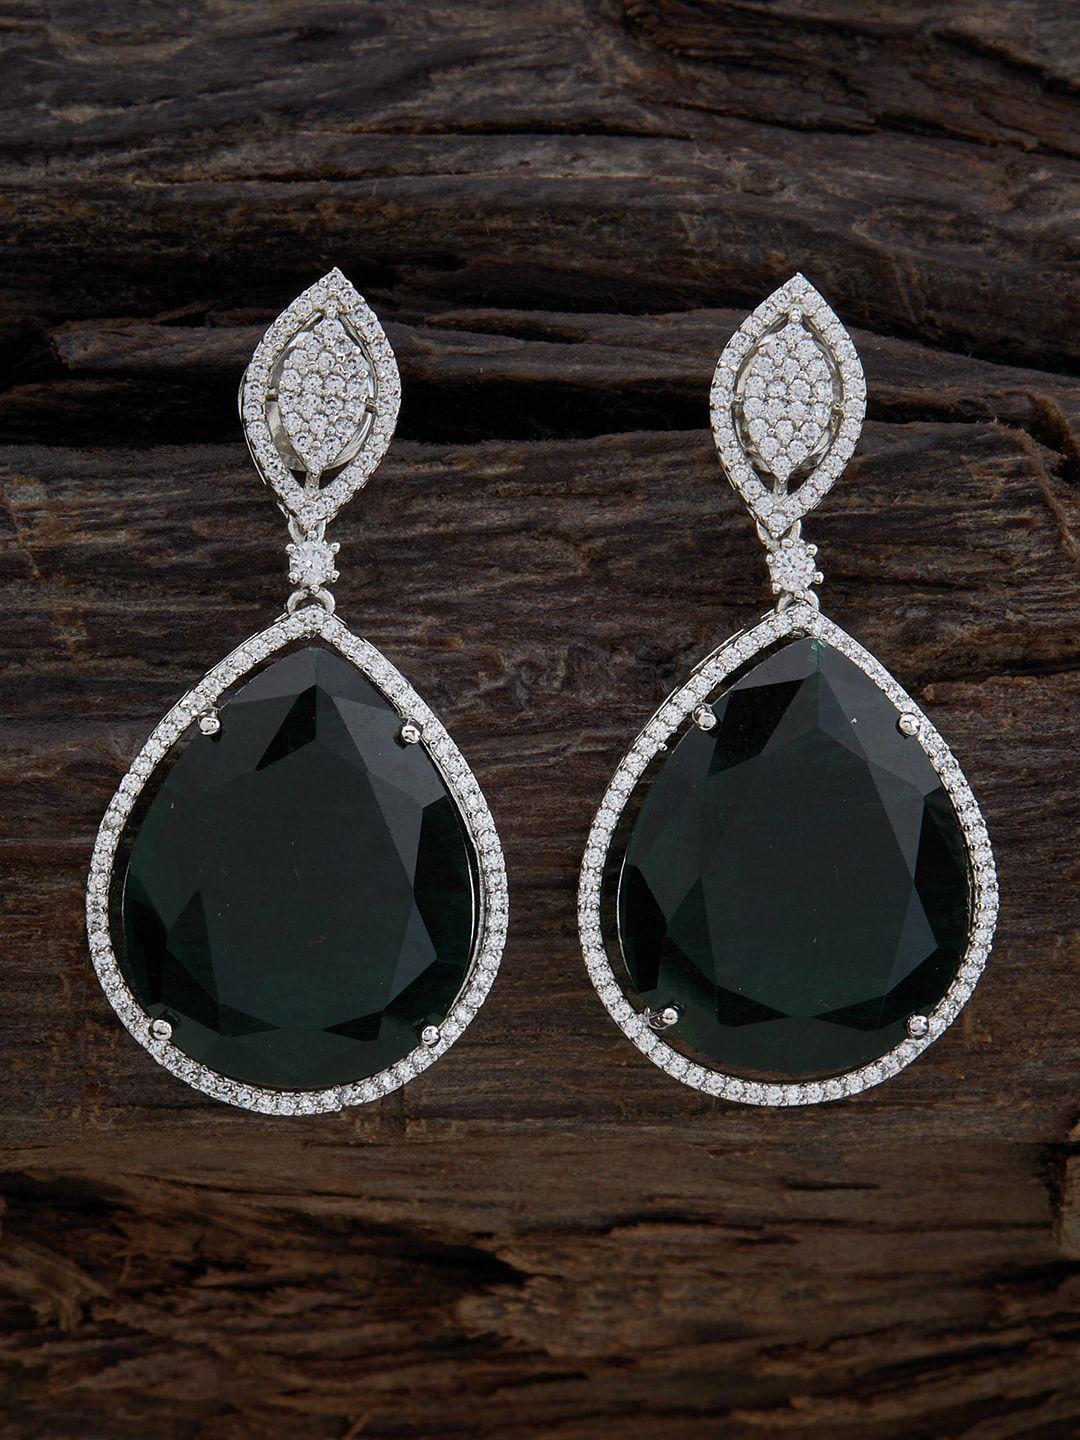 kushal's fashion jewellery rhodium-plated teardrop shaped drop earrings